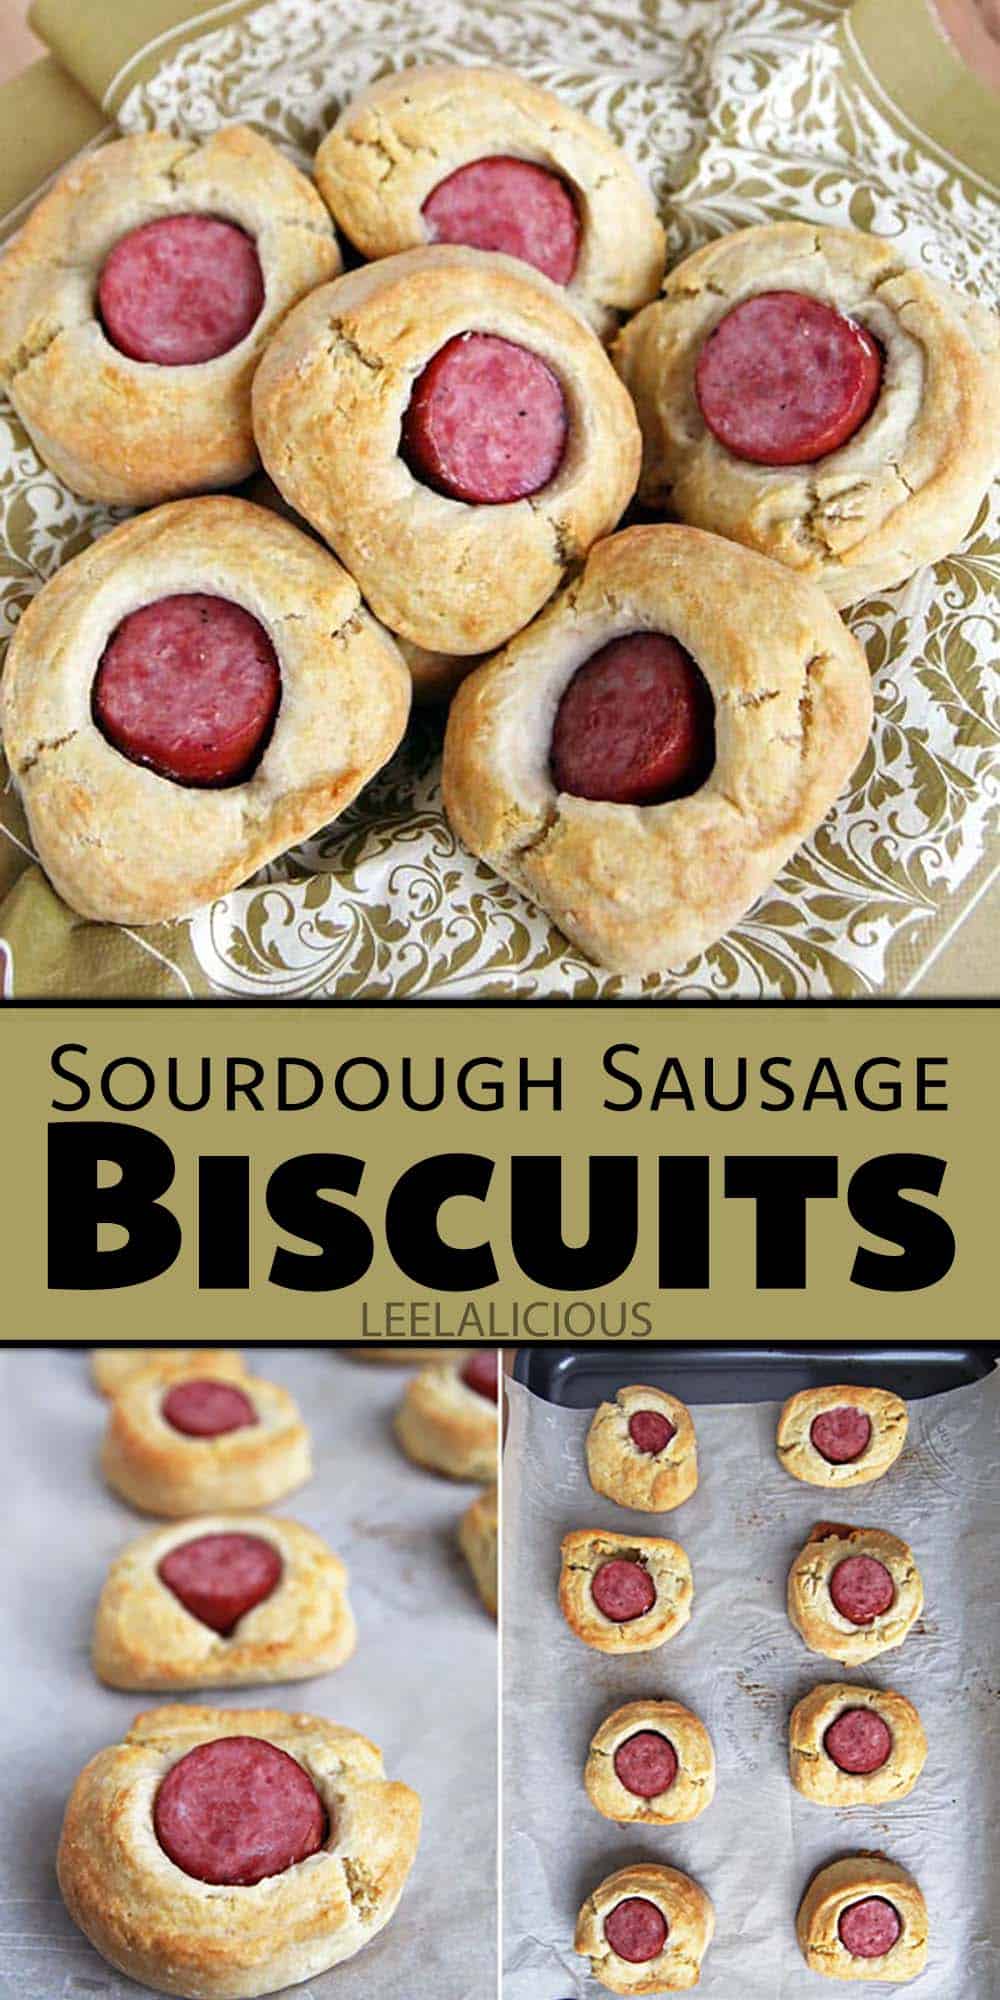 Sourdough Sausage Biscuits